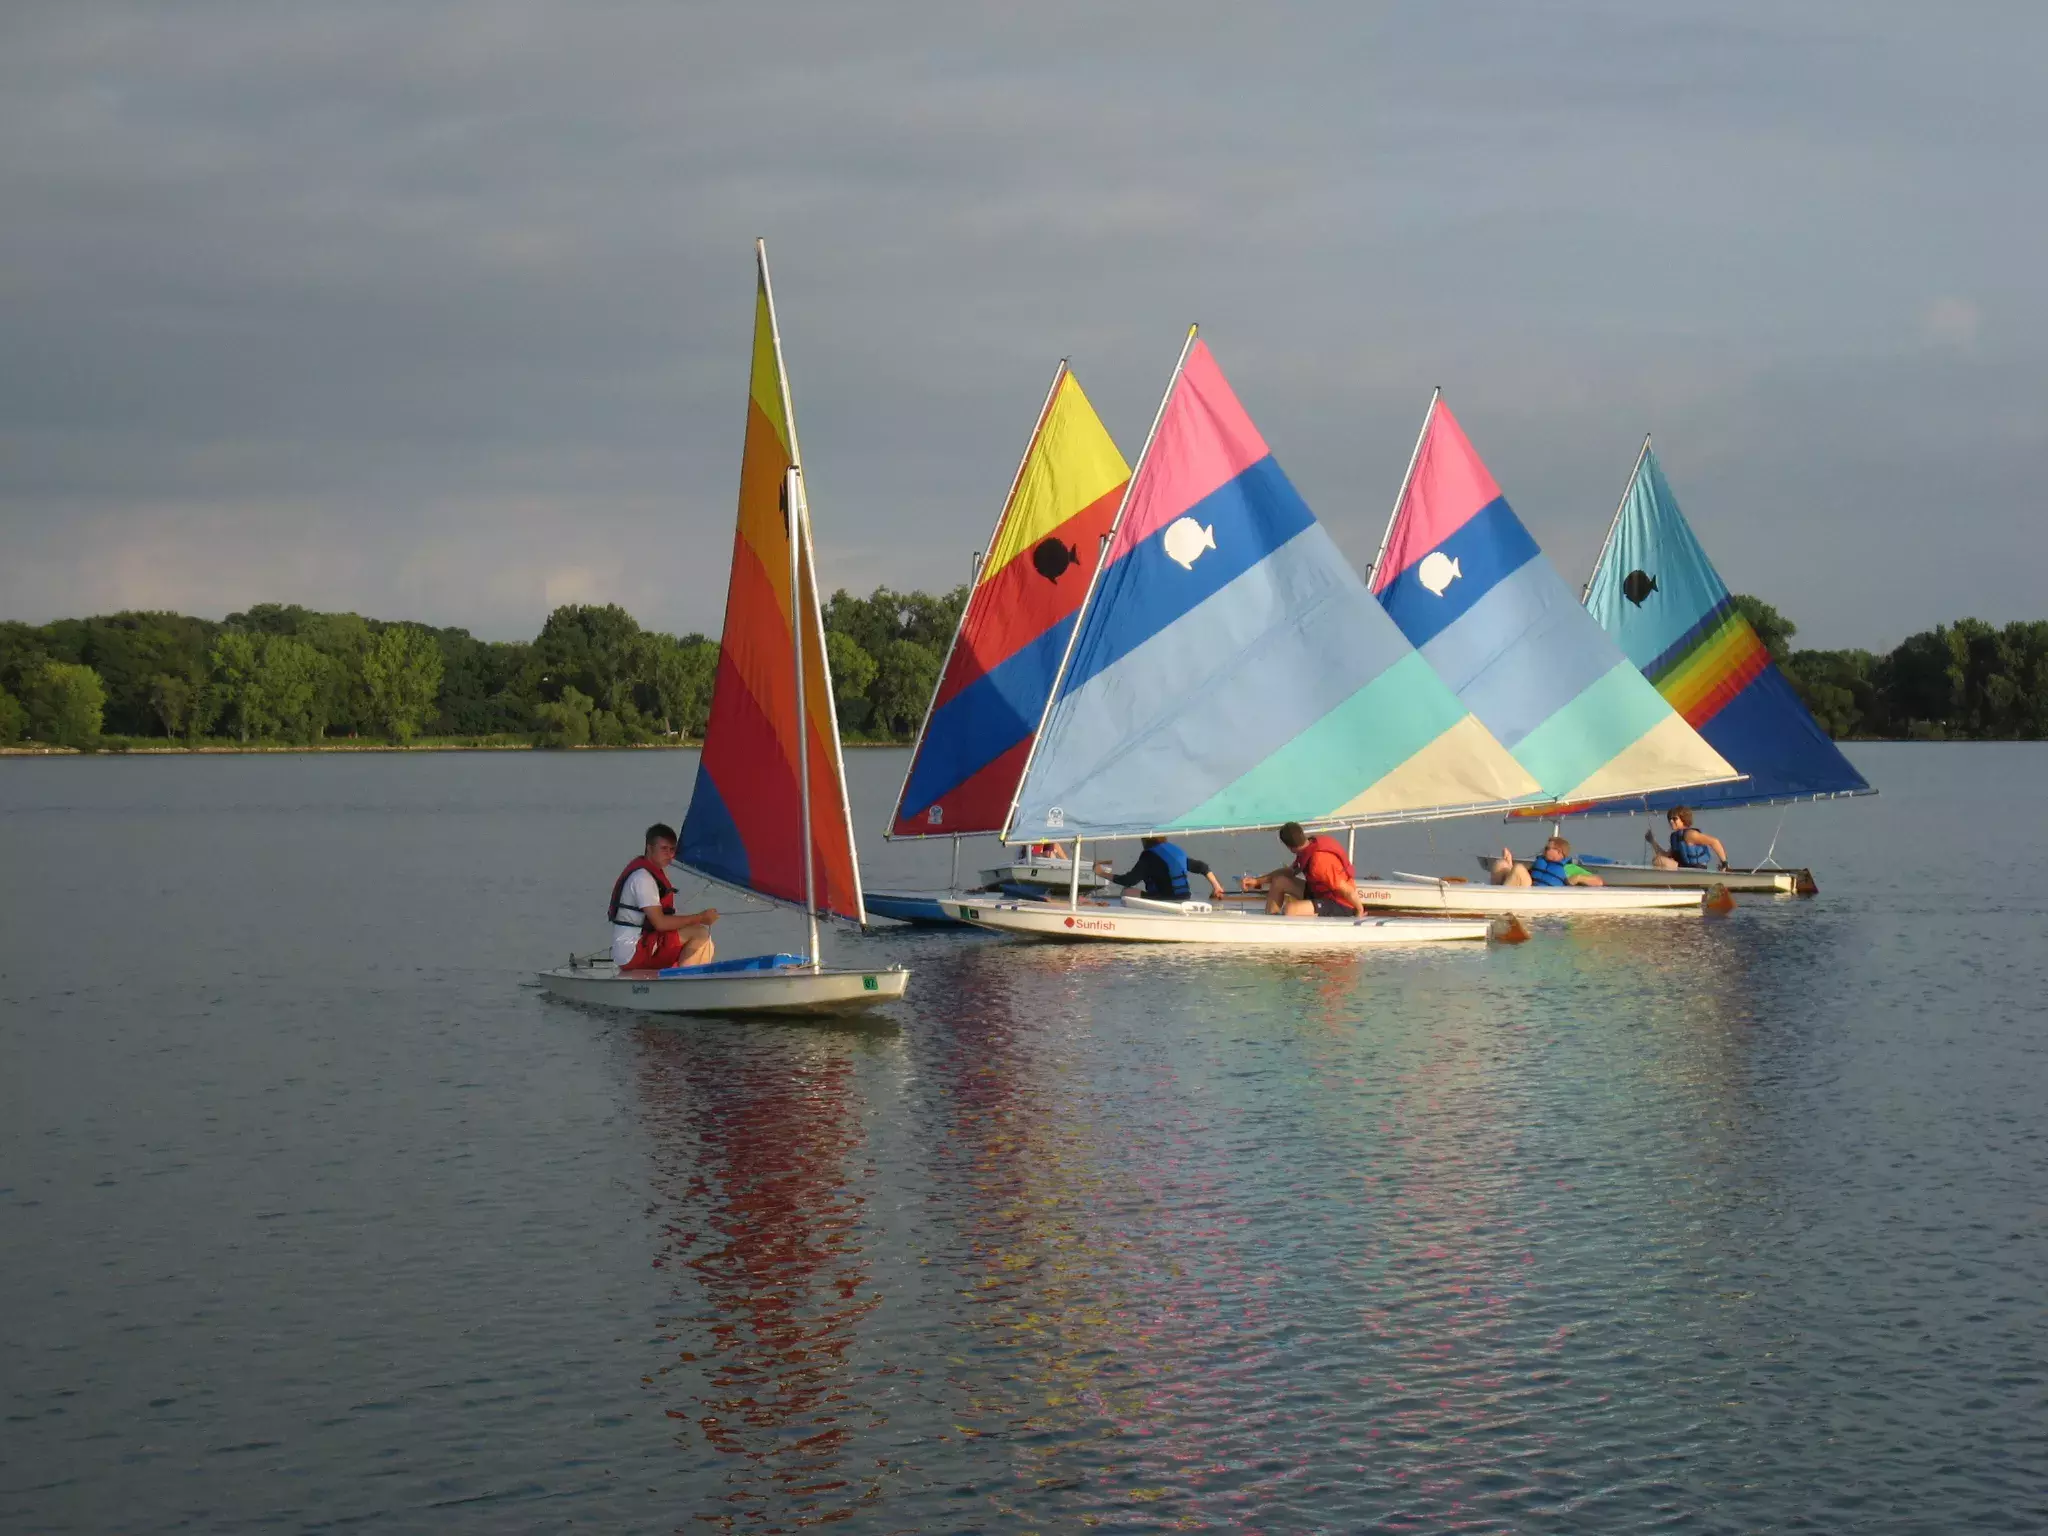 Five Sunfish sailboats with colorful sails on Lake Phalen. 